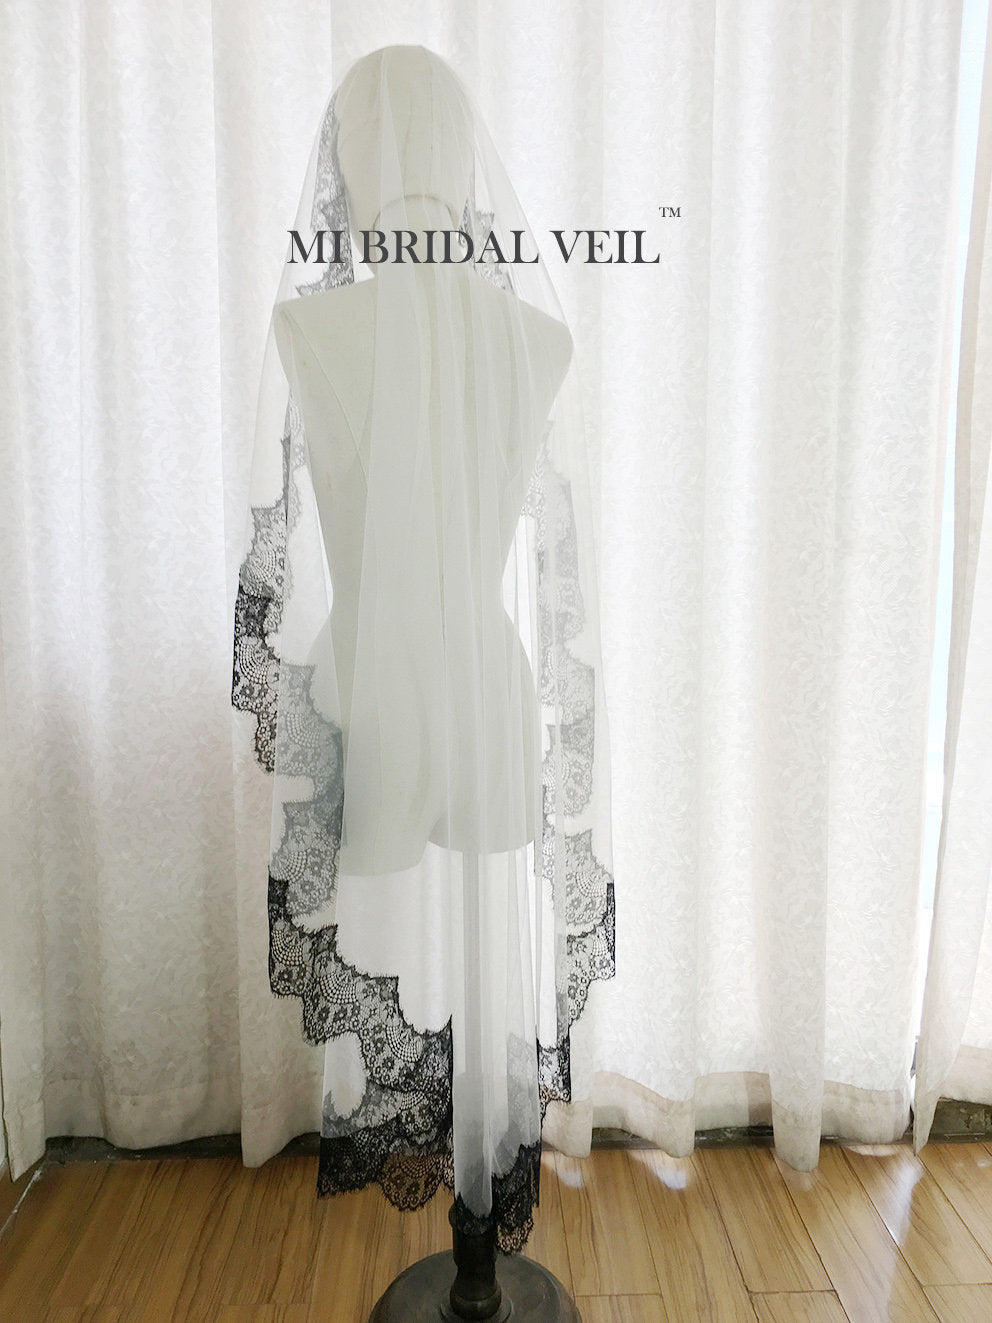 Cathedral Lace Wedding Veil, Eyelash Lace Veil with Blusher, Mi Bridal